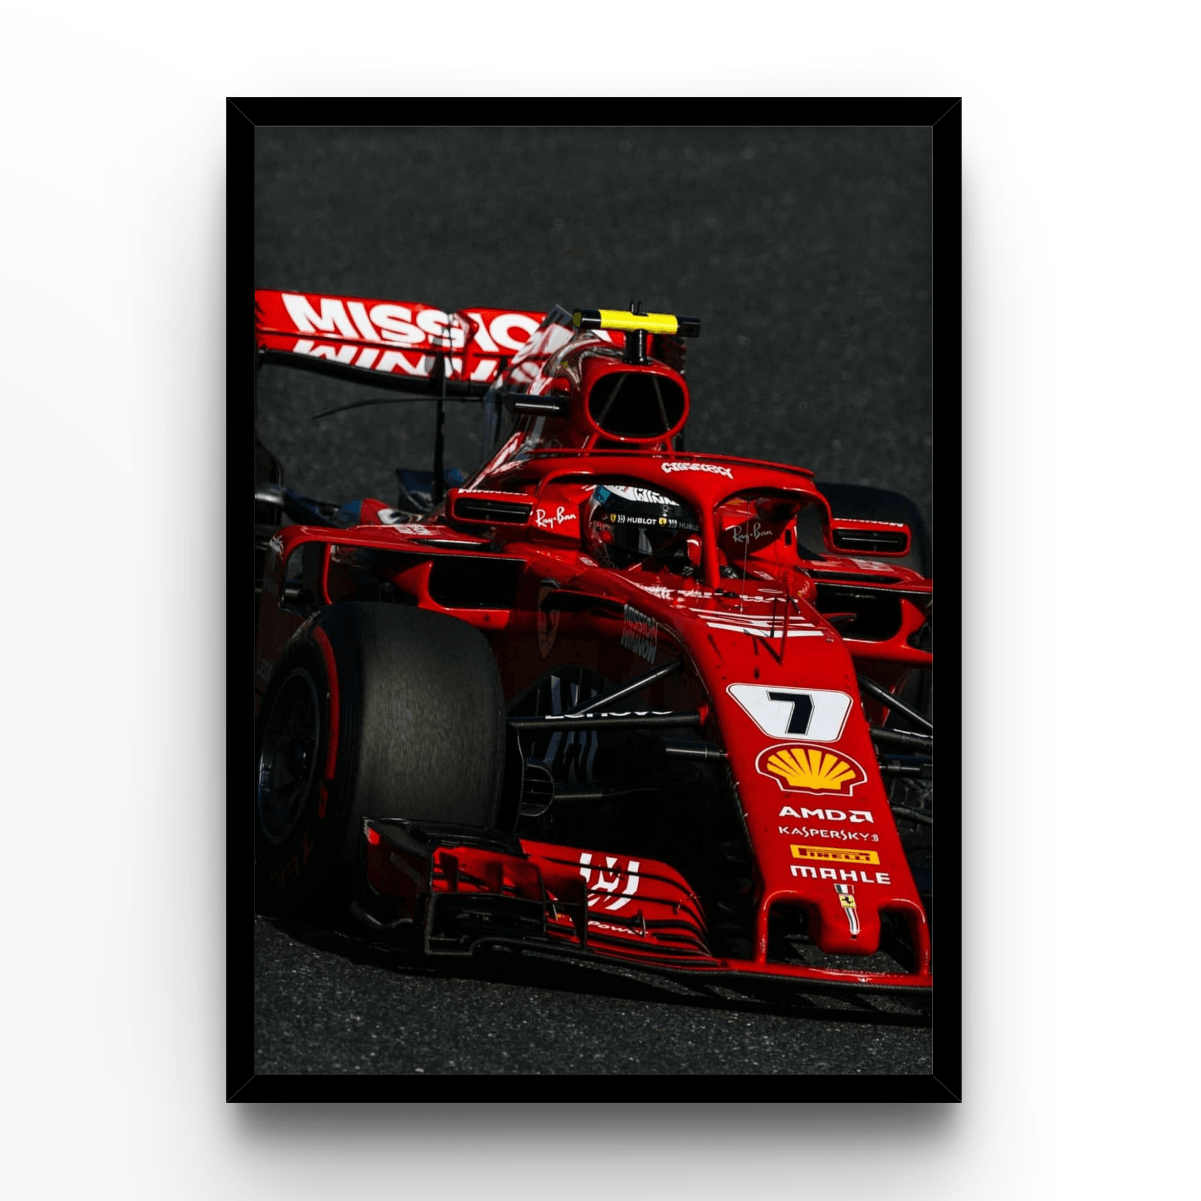 Kimi Räikkönen 1 - A4, A3, A2 Posters Base - Poster Print Shop / Art Prints / PostersBase